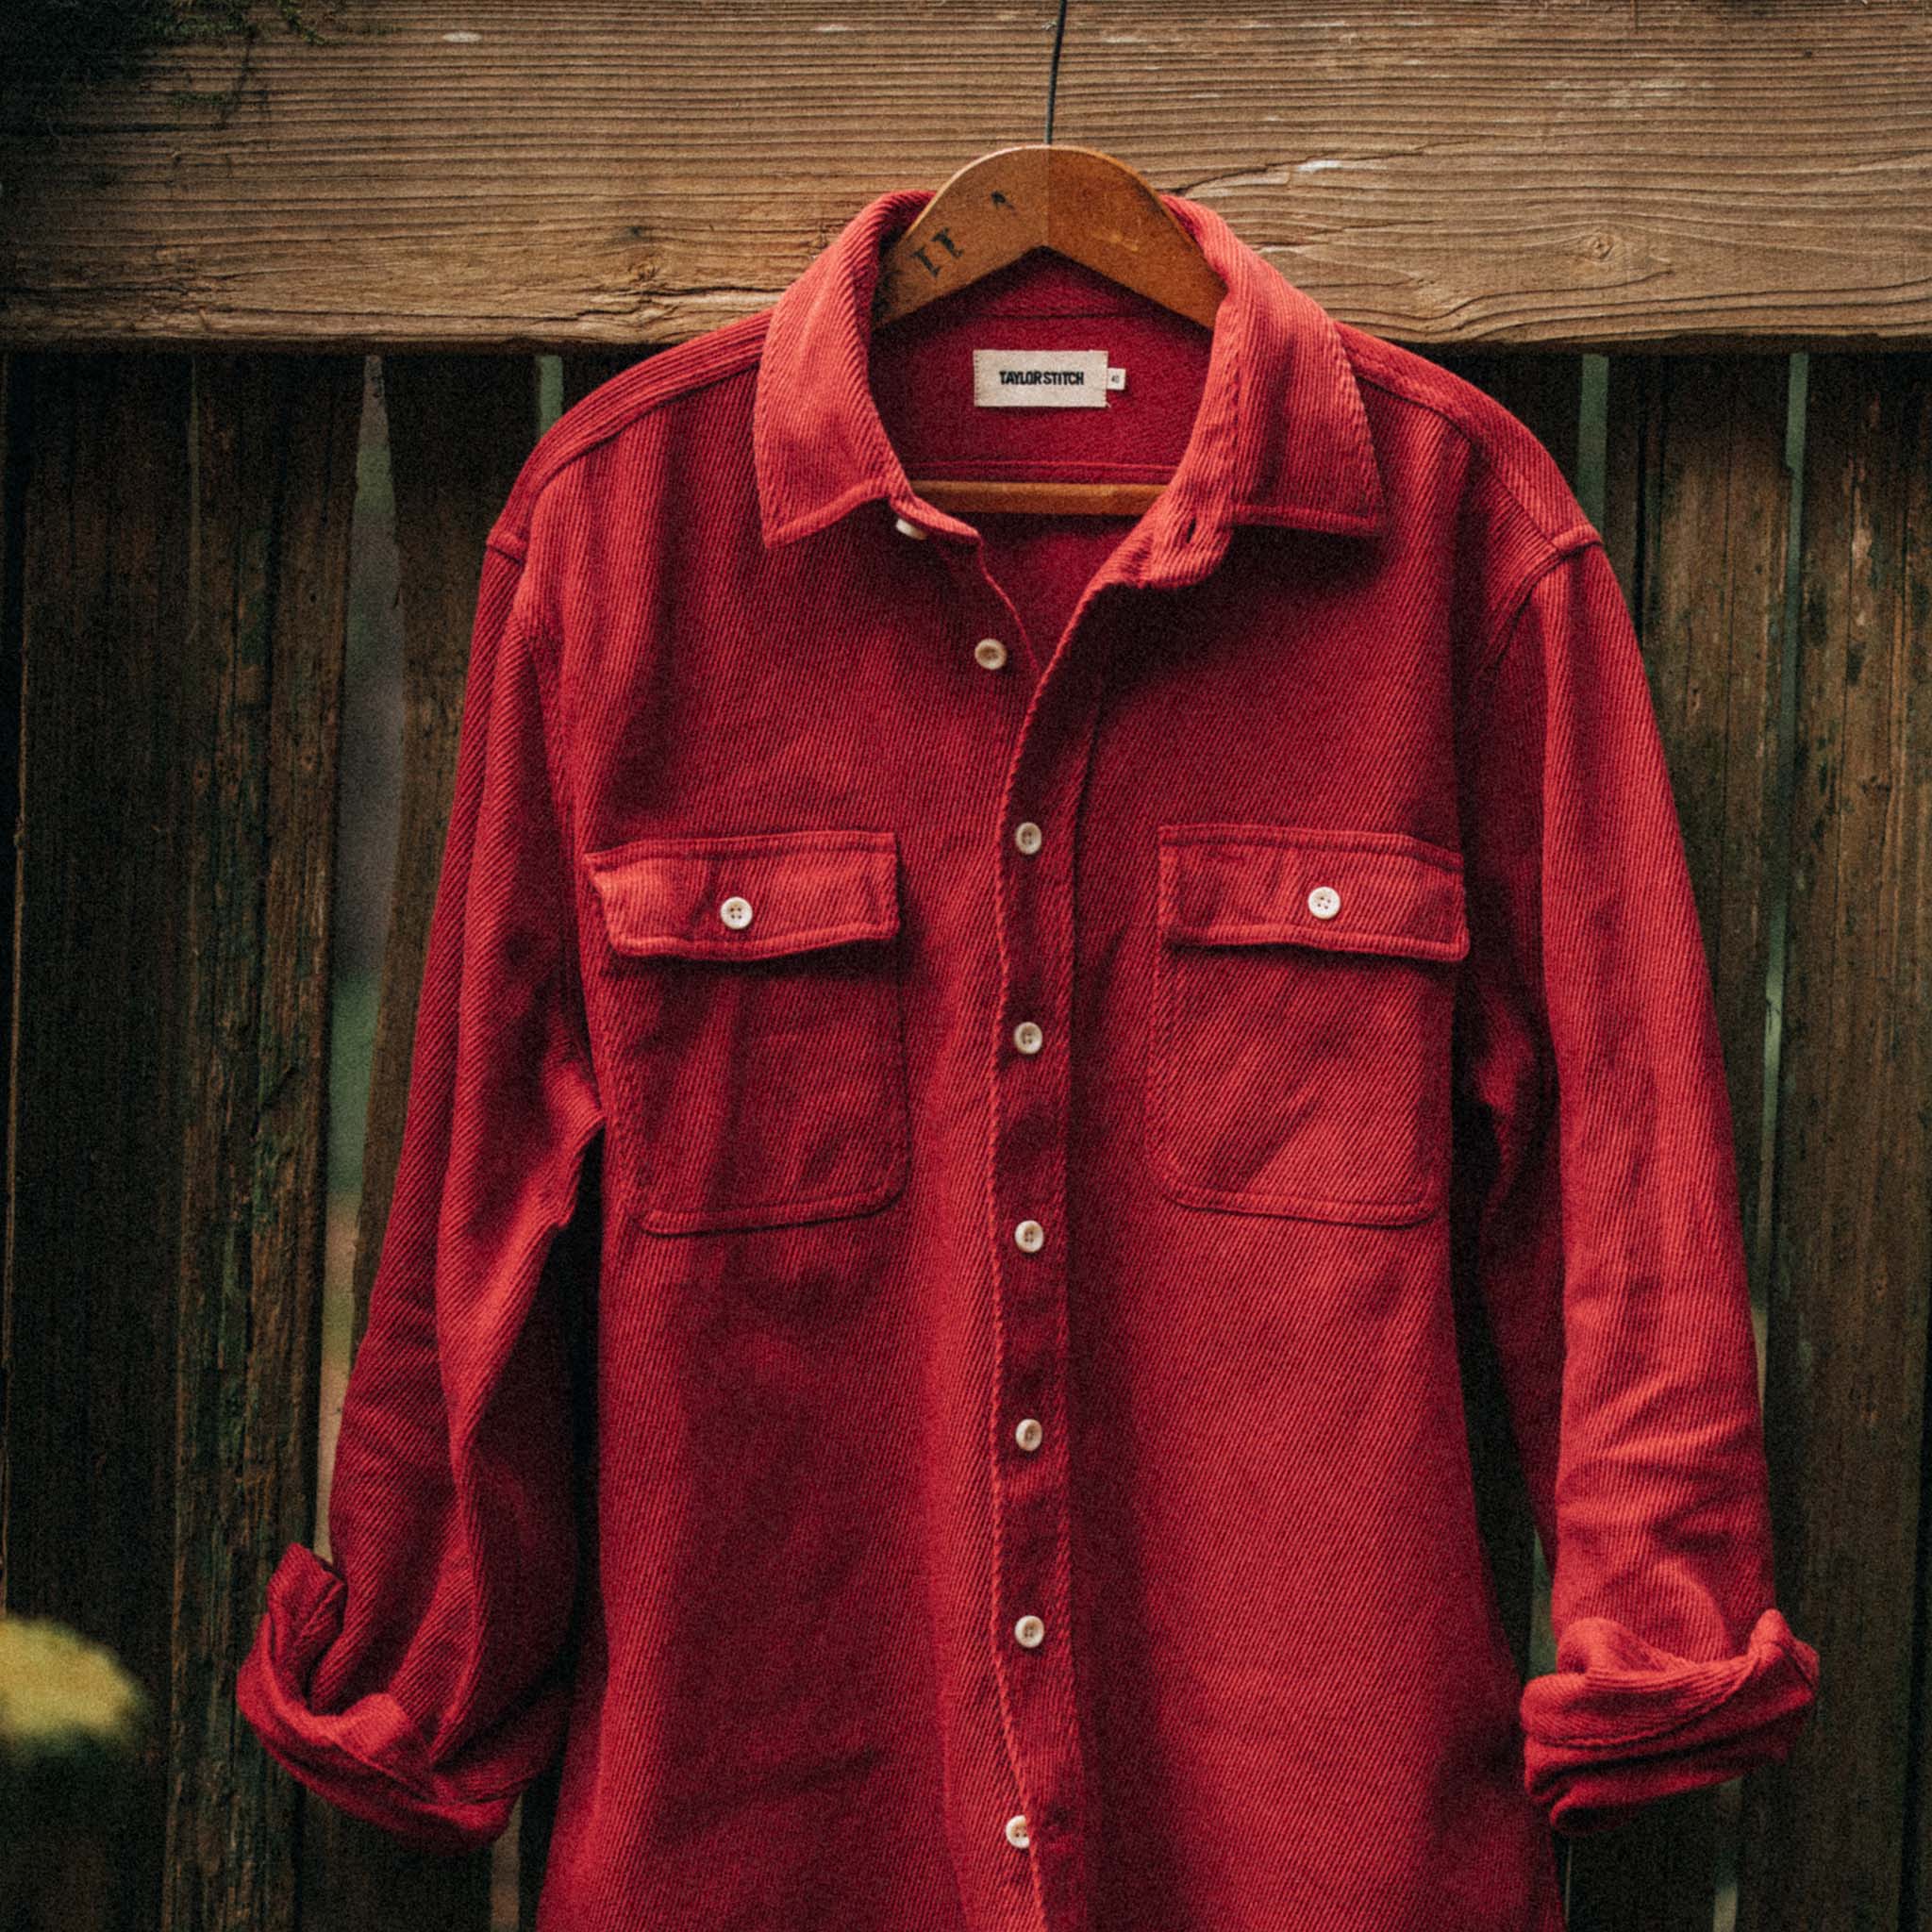 The Ledge Shirt in Cardinal